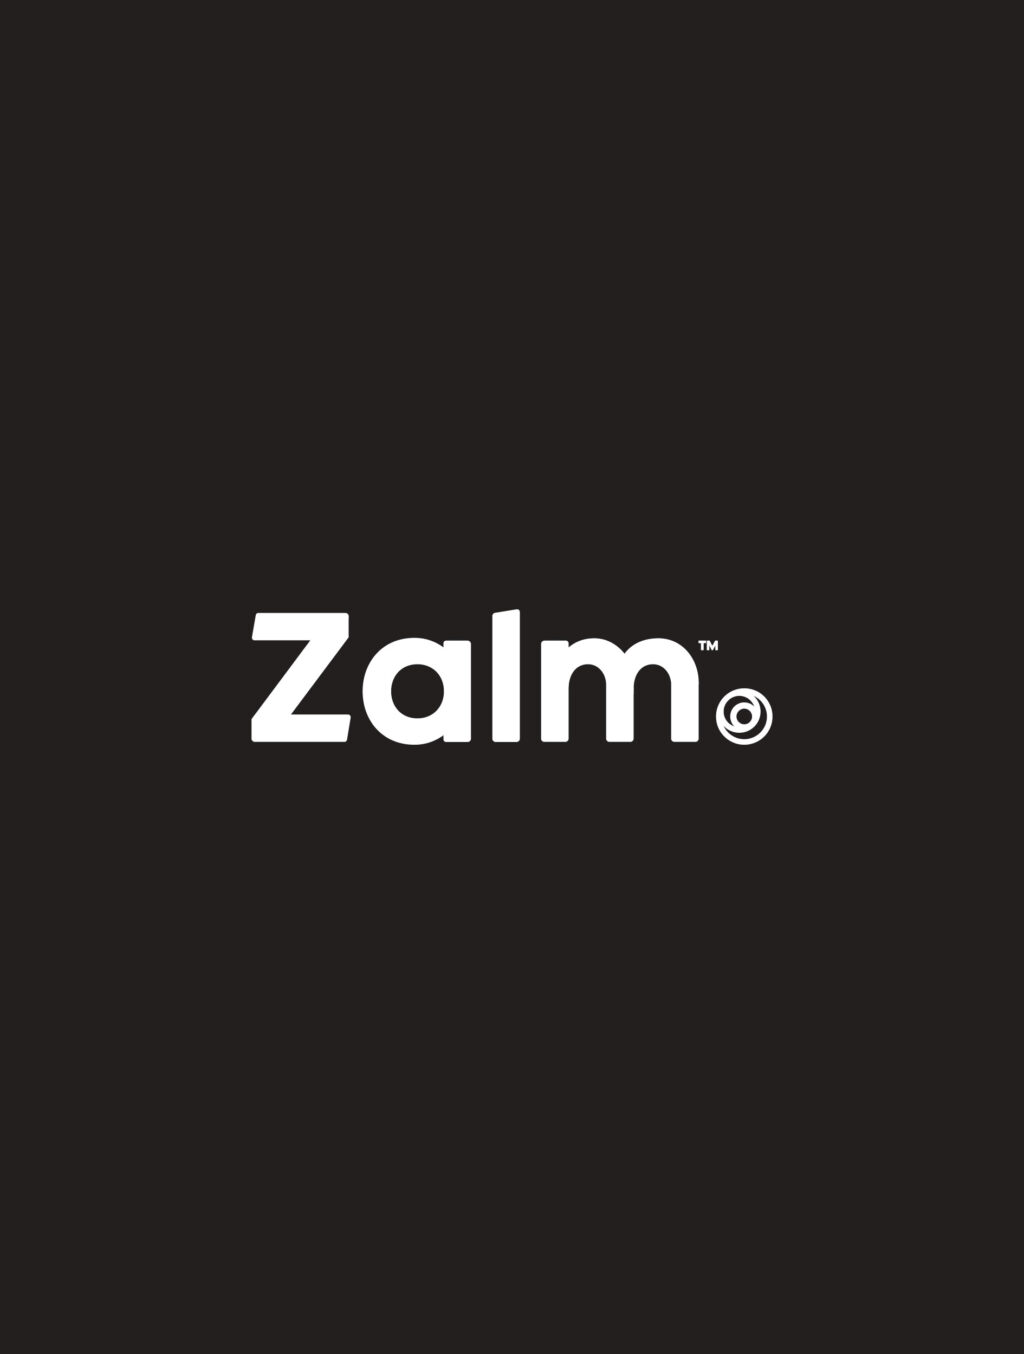 Zalm – 2019